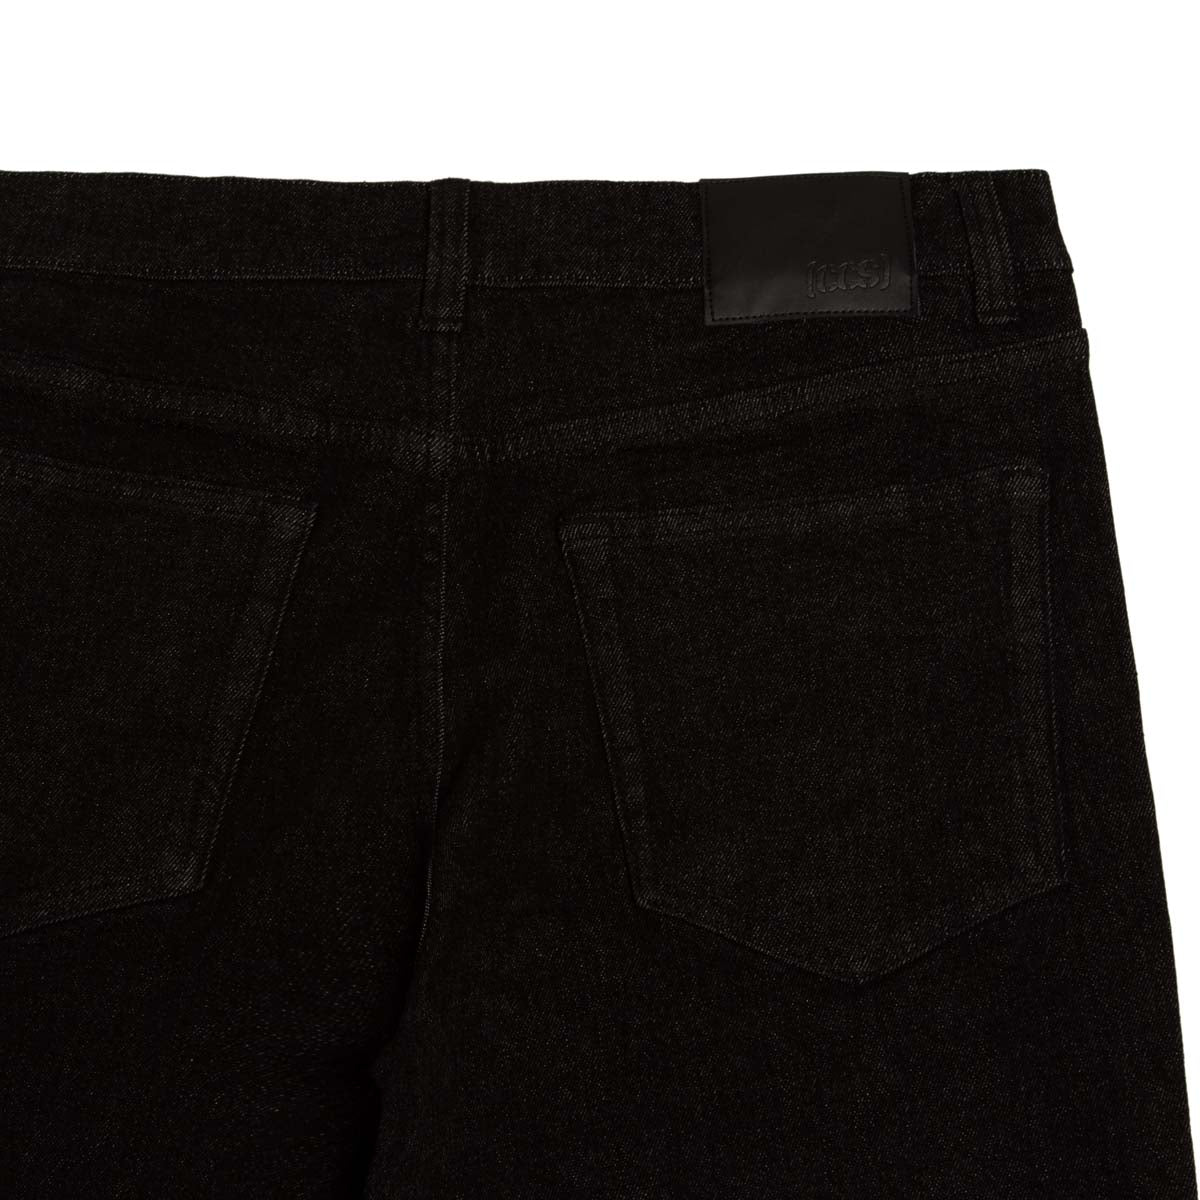 CCS 12oz Stretch Slim Denim Jeans - 12oz Black image 6